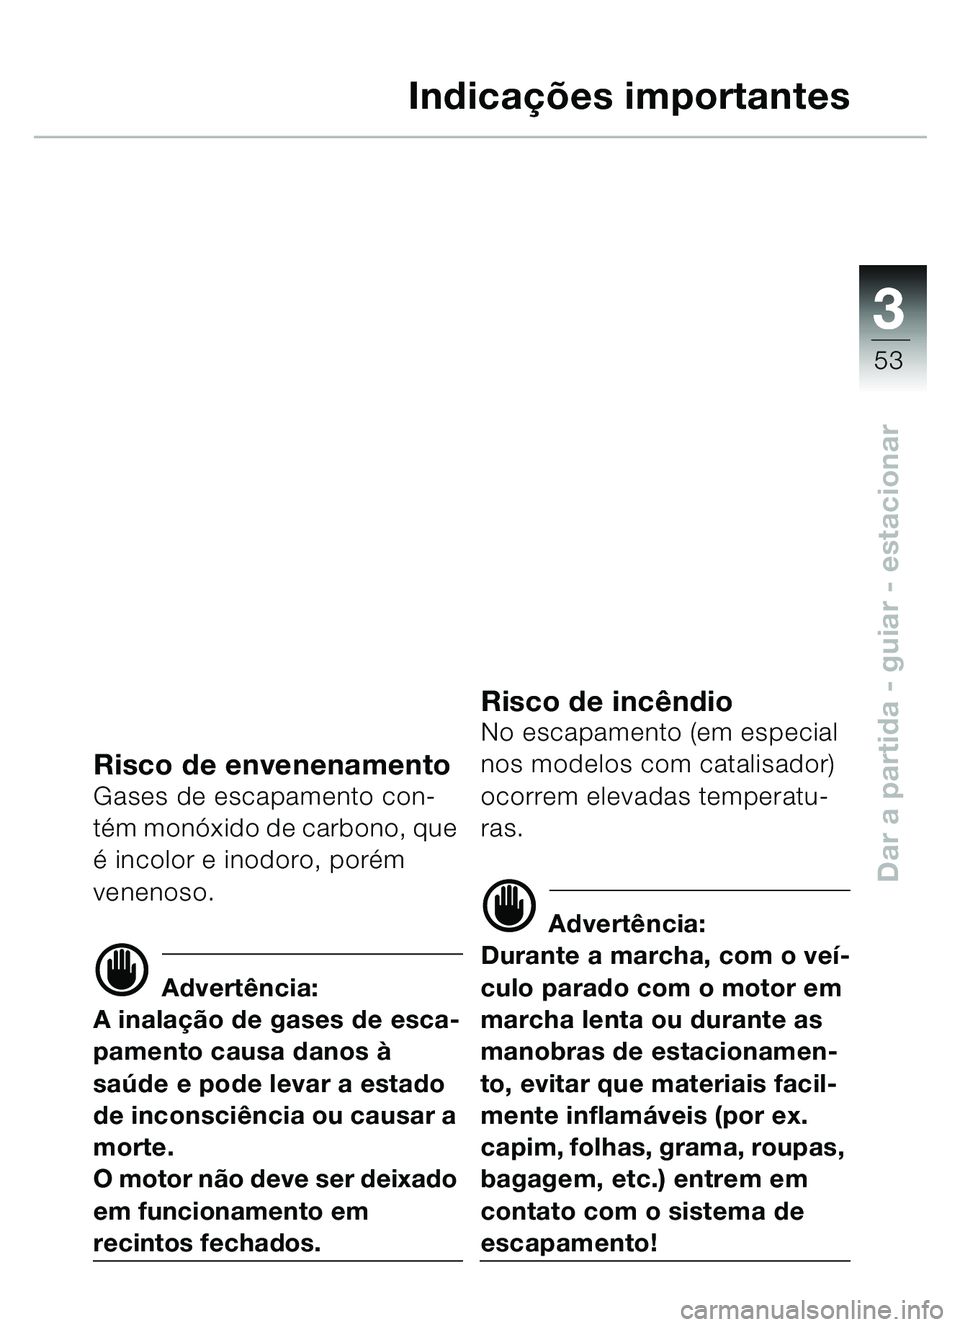 BMW MOTORRAD C1 2000  Manual do condutor (in Portuguese) 33
53
Dar a partida - guiar - estacionar
Indicações importantes
Risco de envenenamentoGases de escapamento con-
tém monó xido de carbono, que 
é incolor e inodoro, por ém 
venenoso. 
d Advert ê